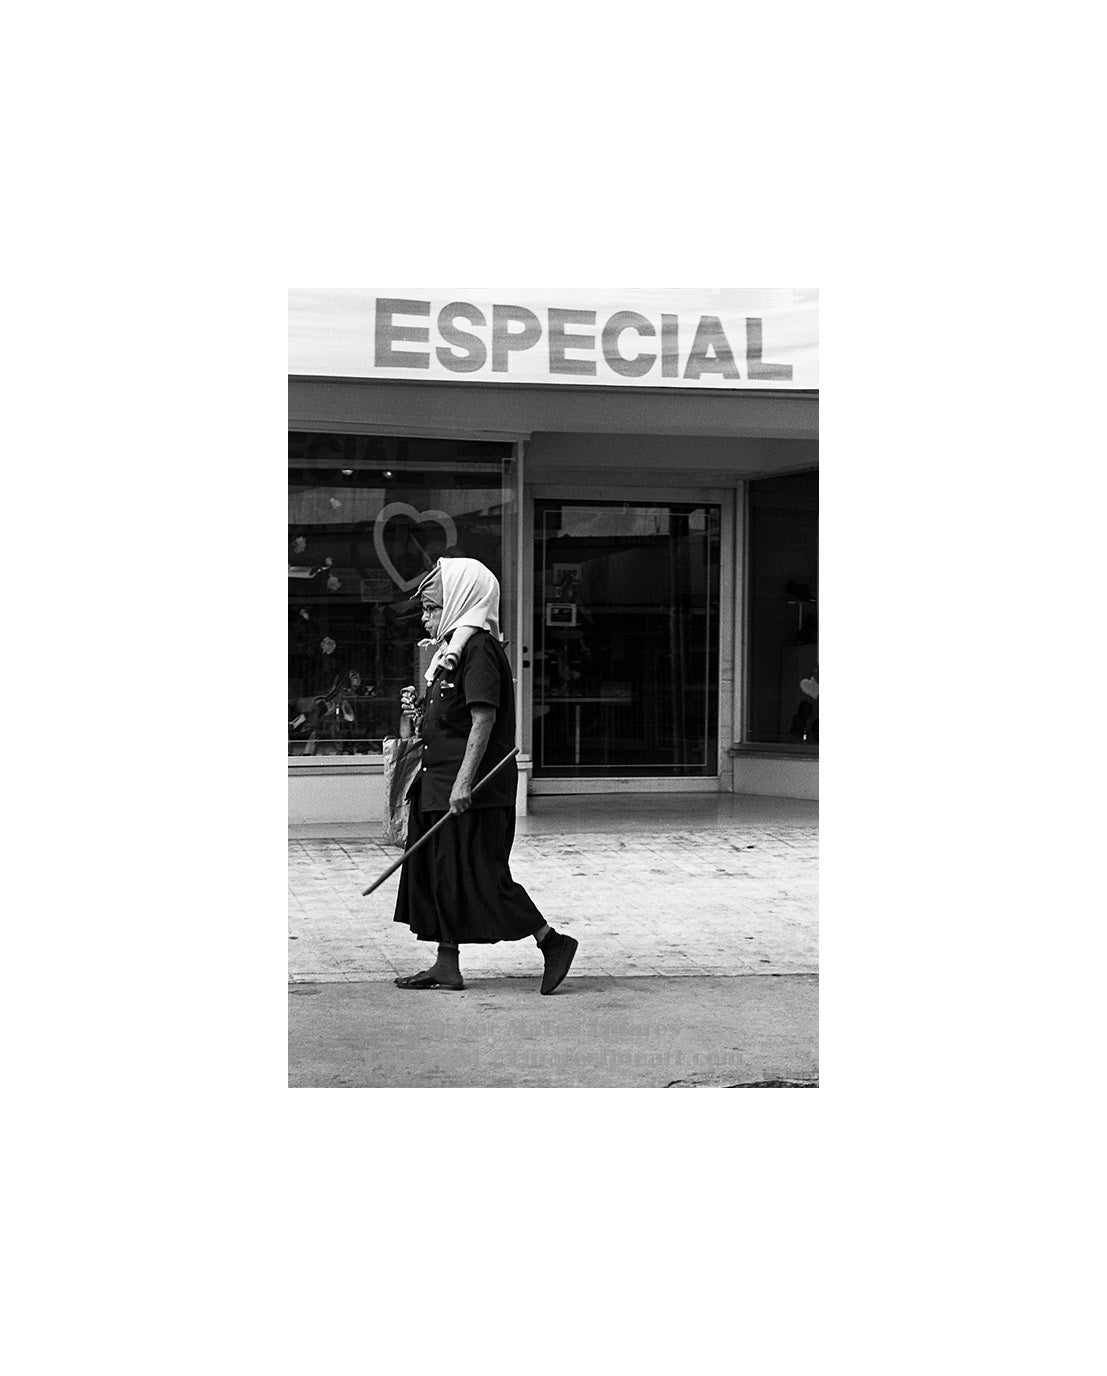 "Especial" - Street Photography